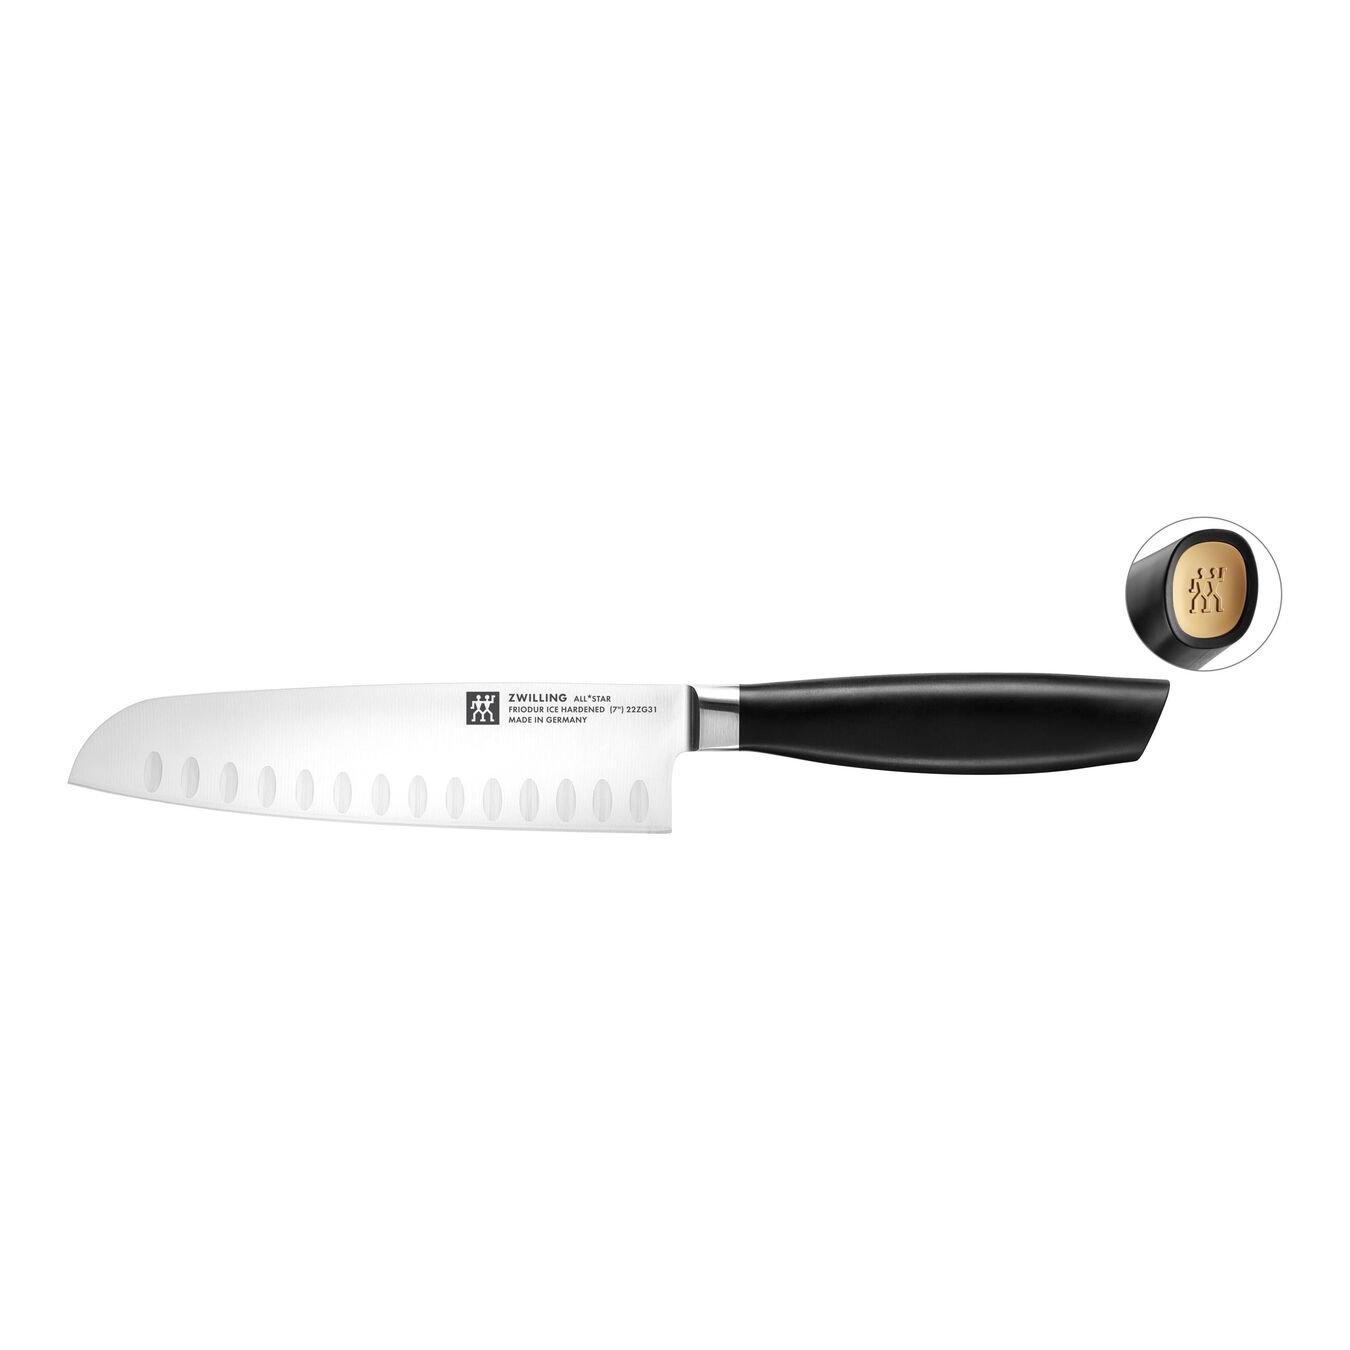 Santoku Japansk kockkniv 18 cm, guld matt,,large 1